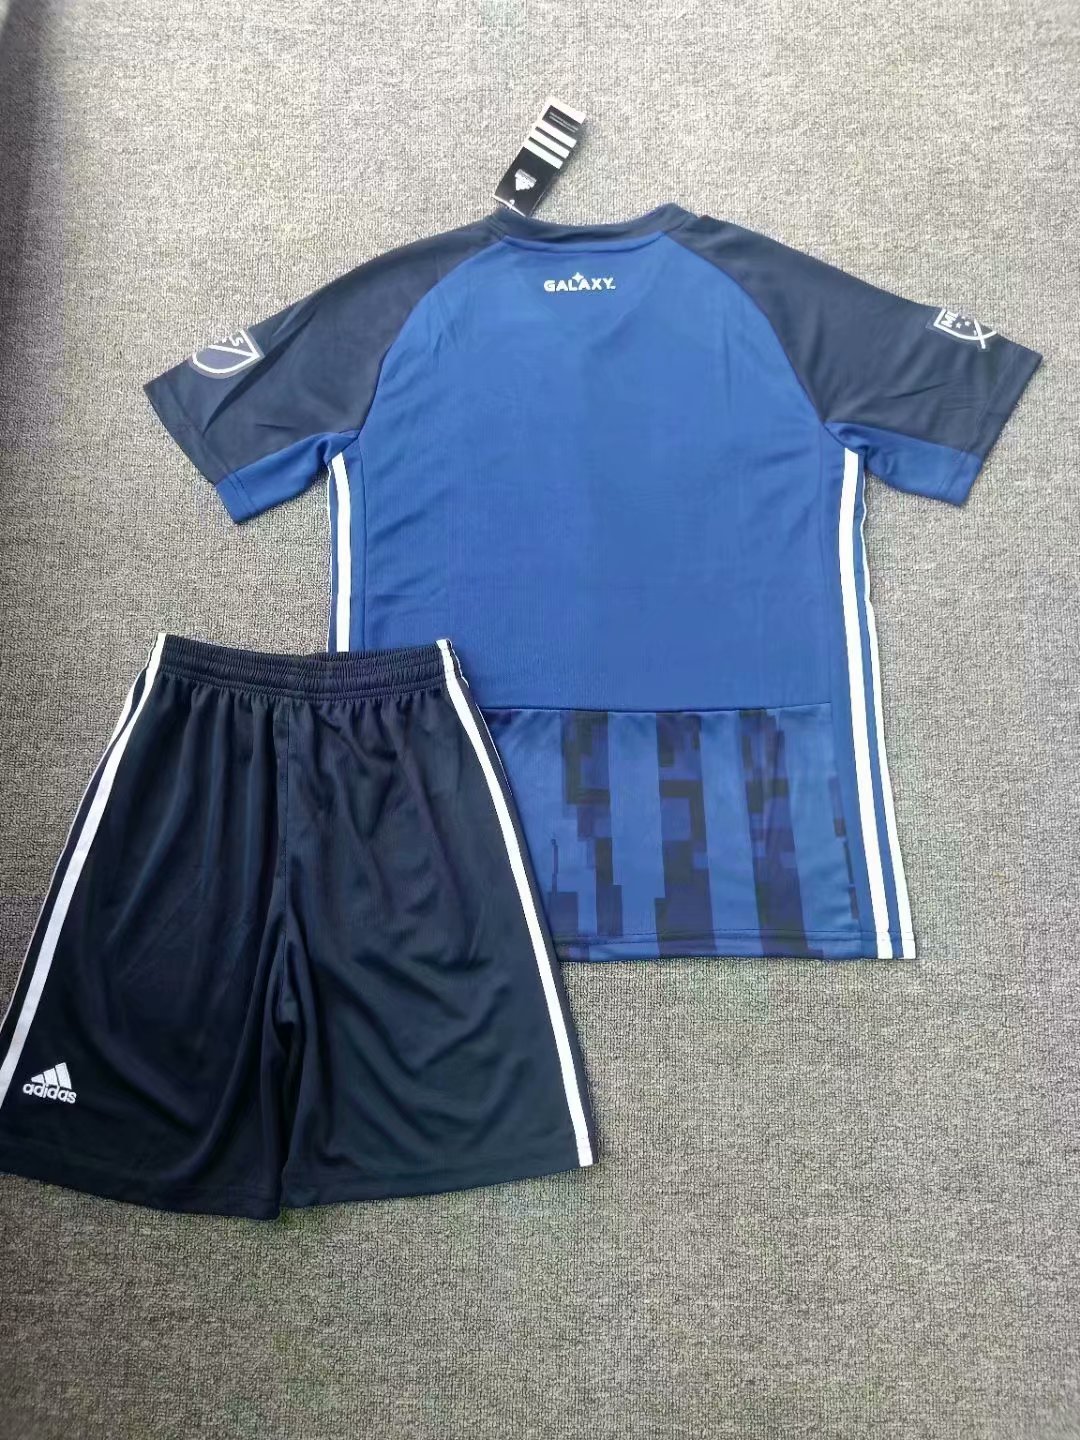 19-20 Adult Galaxy Home Soccer Jersey Football Uniforms